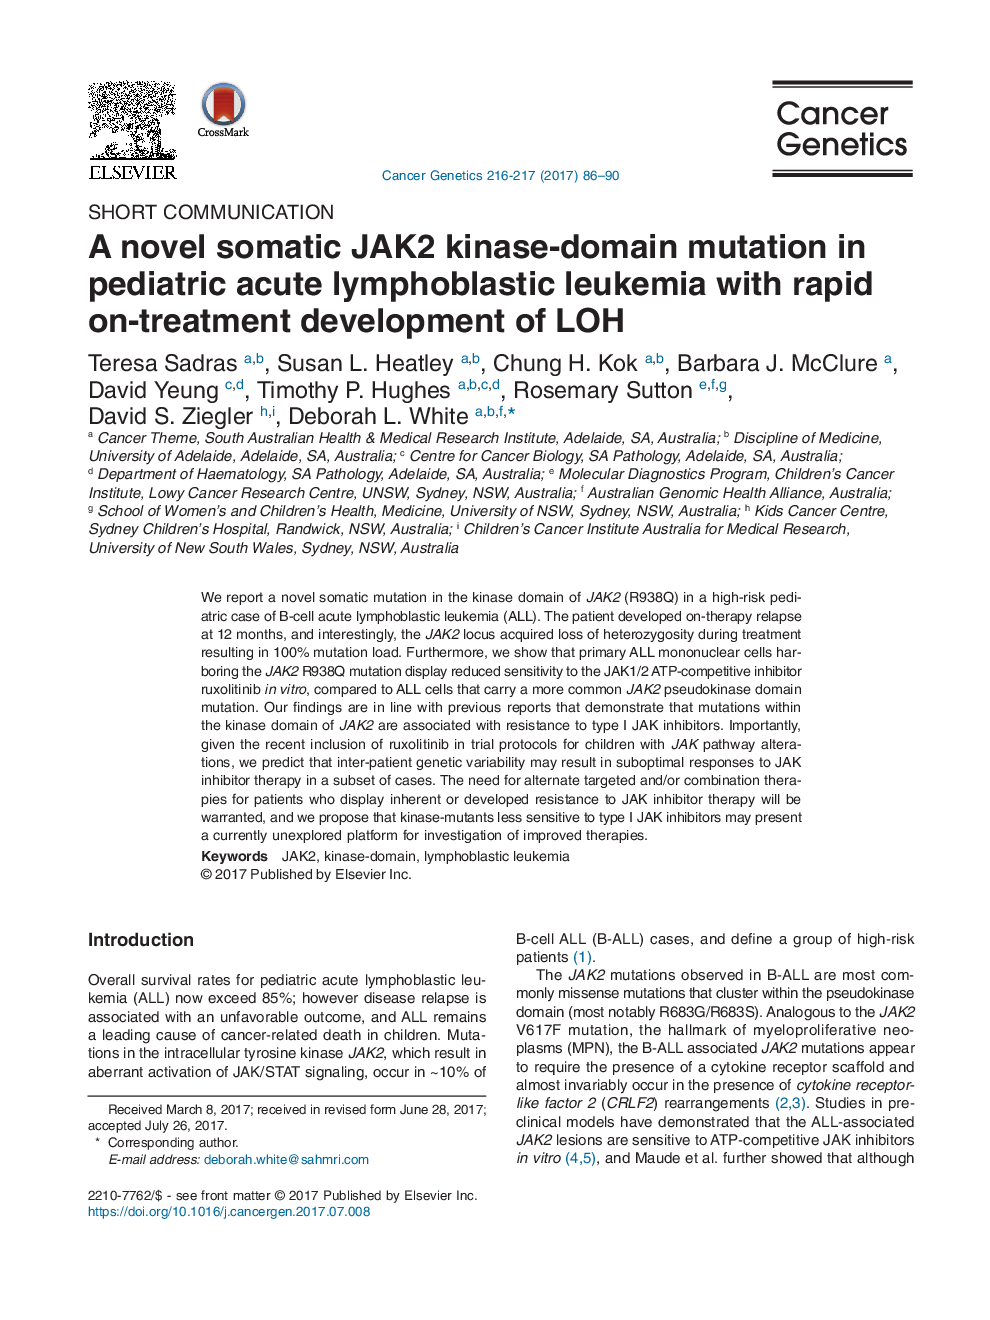 Short CommunicationA novel somatic JAK2 kinase-domain mutation in pediatric acute lymphoblastic leukemia with rapid on-treatment development of LOH